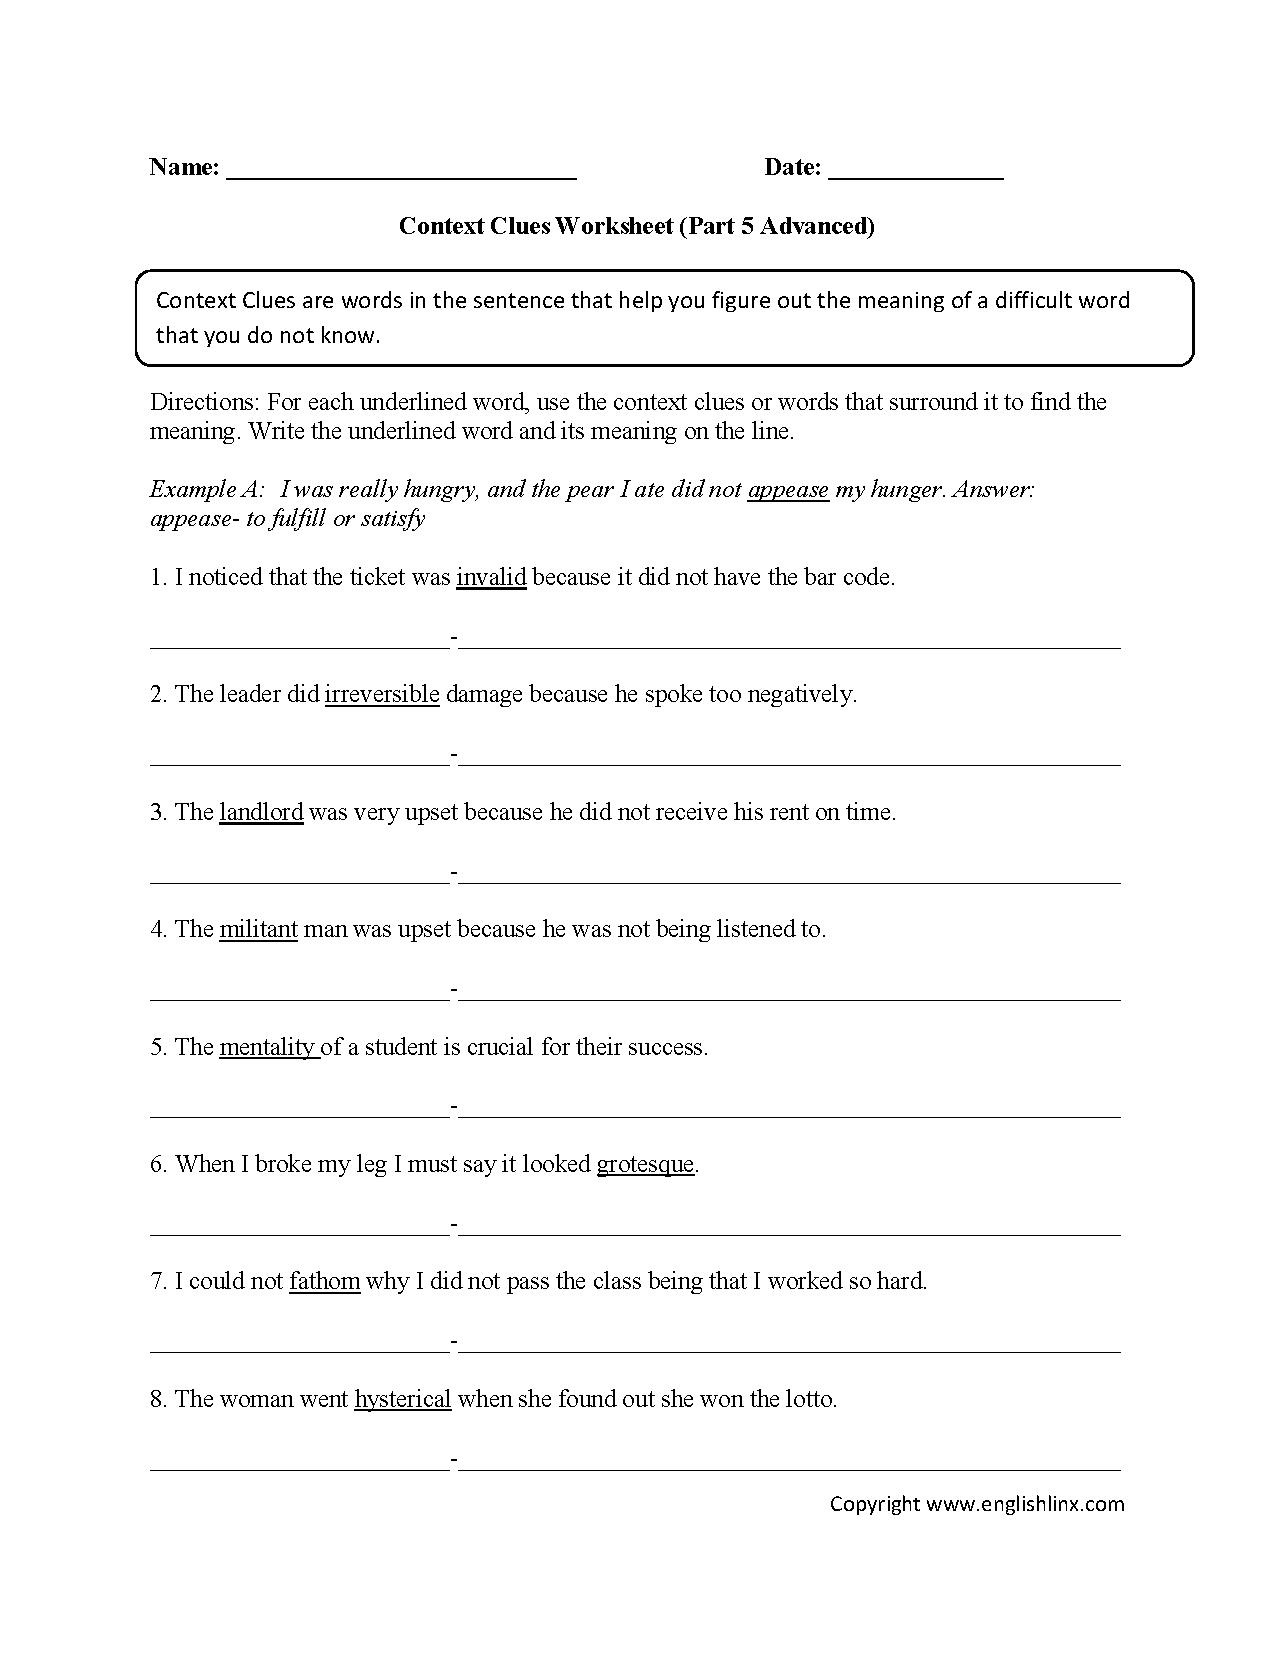 Context Clues Worksheets Advanced Part 5